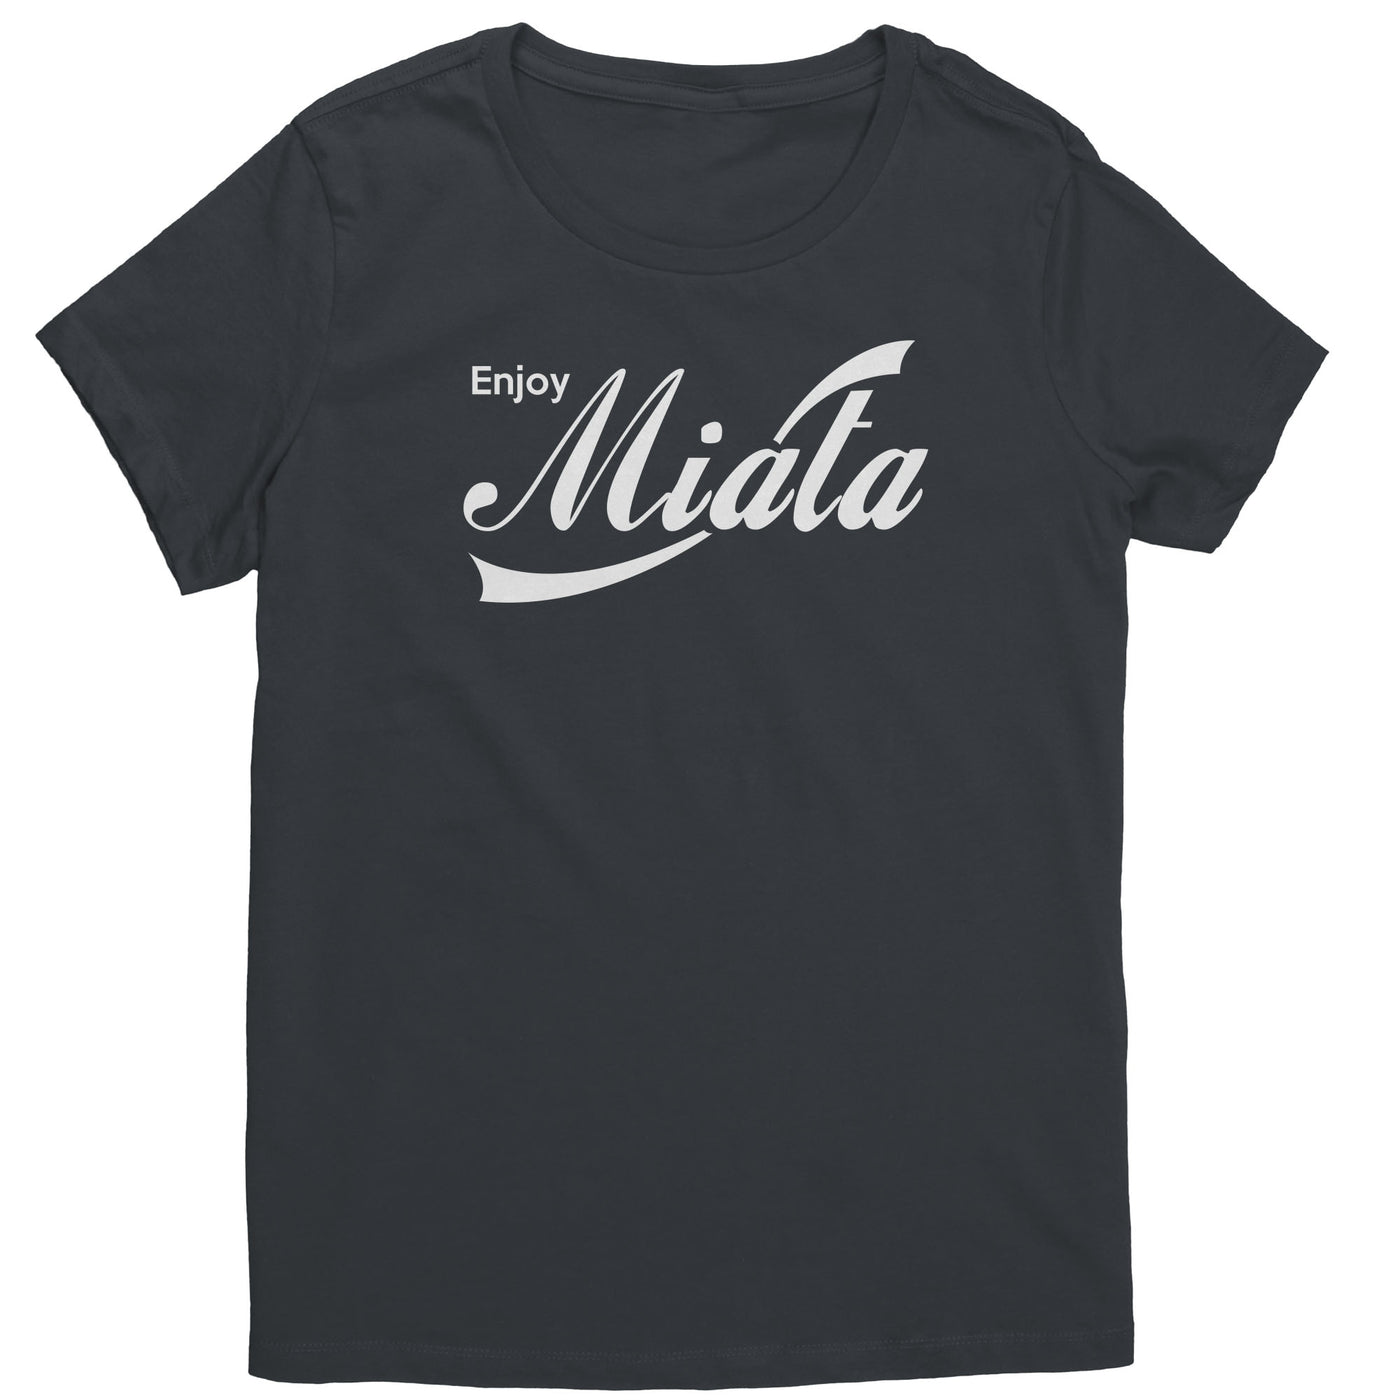 enjoy-miata-womens-shirt-charcoal